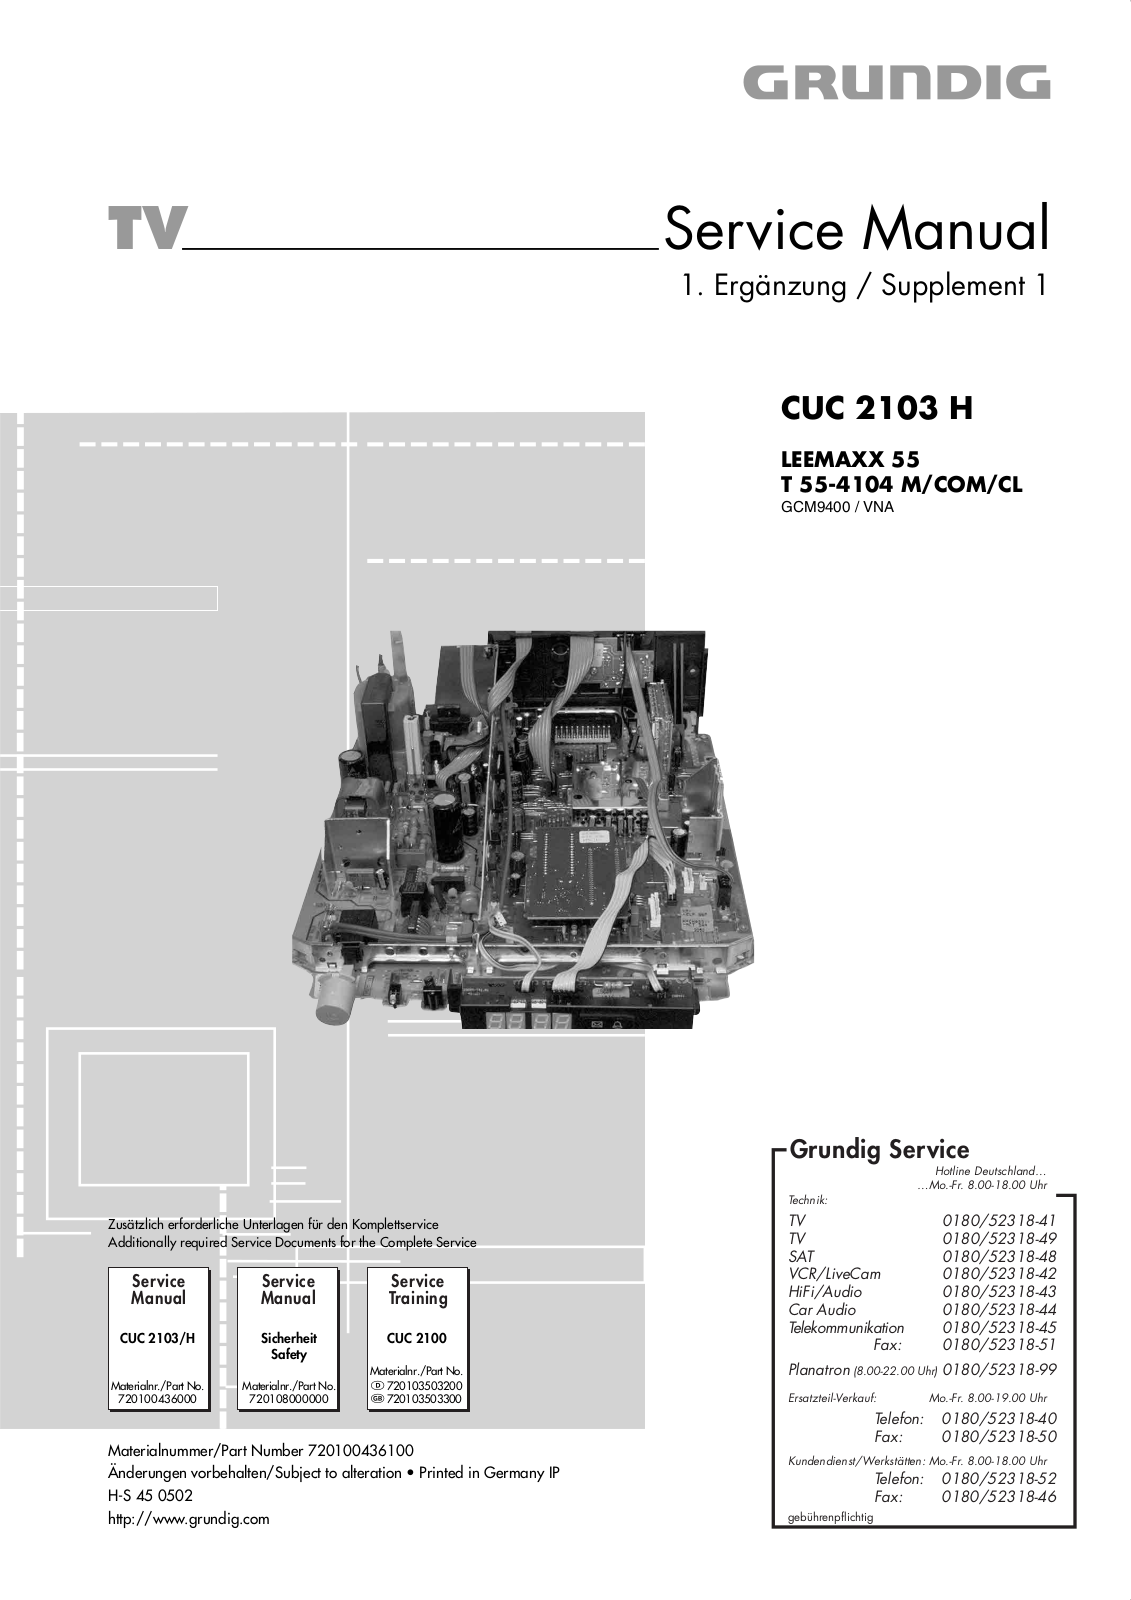 Grundig CUC 2103 H, LEEMAXX 55 T 55-4104 M-COM-CL Service Manual